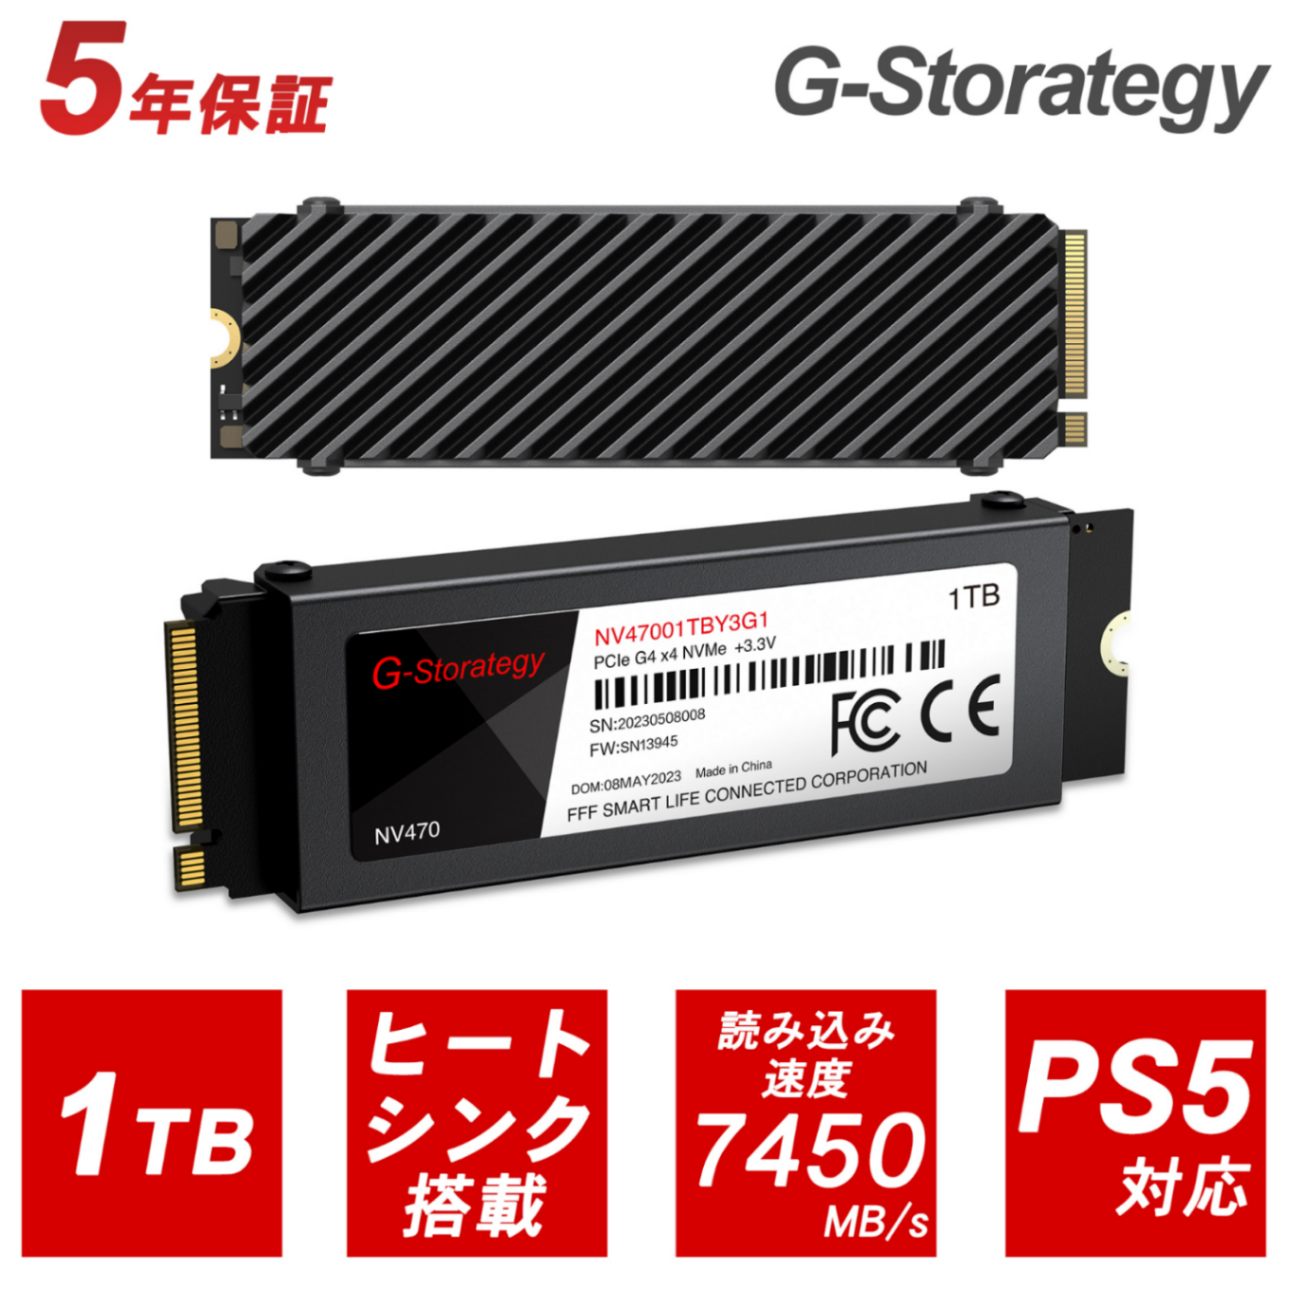 SSD 1TB M.2 Gen4×4 ヒートシンク付き PS5動作確認 NVMe 2280 3D NAND 最大読込:7450MB/s 最大書込:6600MB/s FFF G-Storategy 国内メーカー 5年保証 NV47001TBY3G1